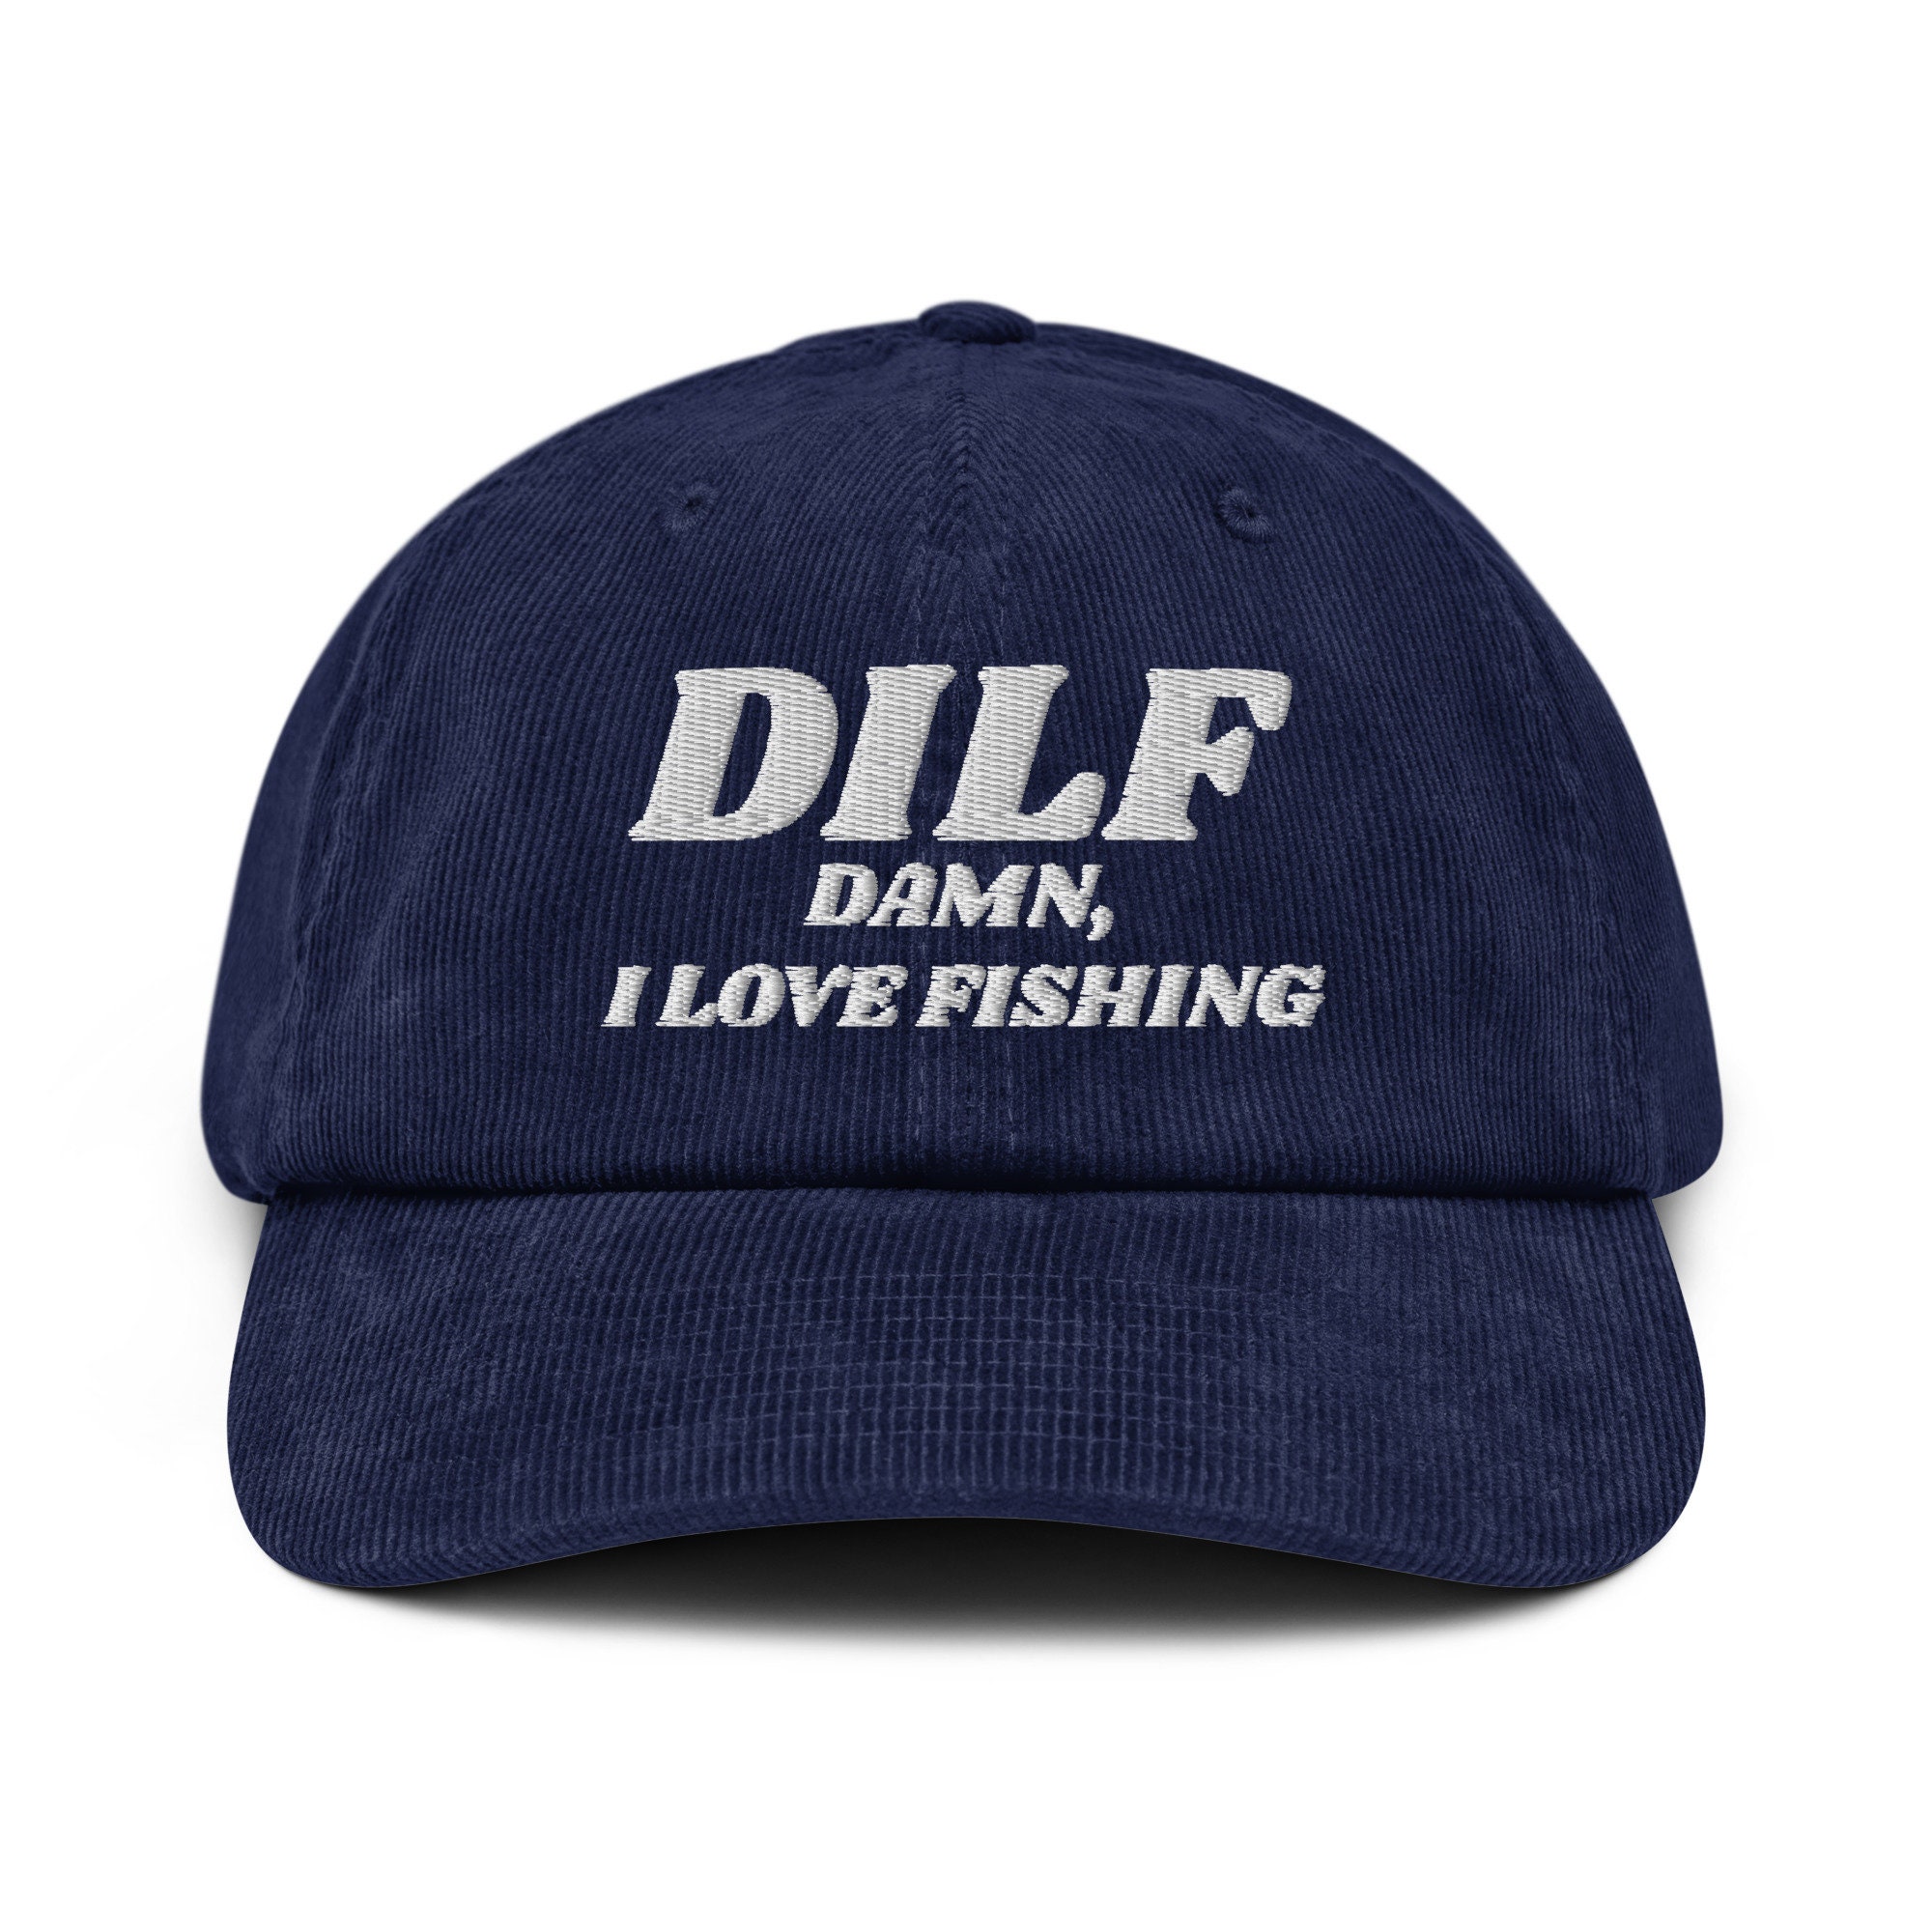 Dilf Damm I Love Fish hat